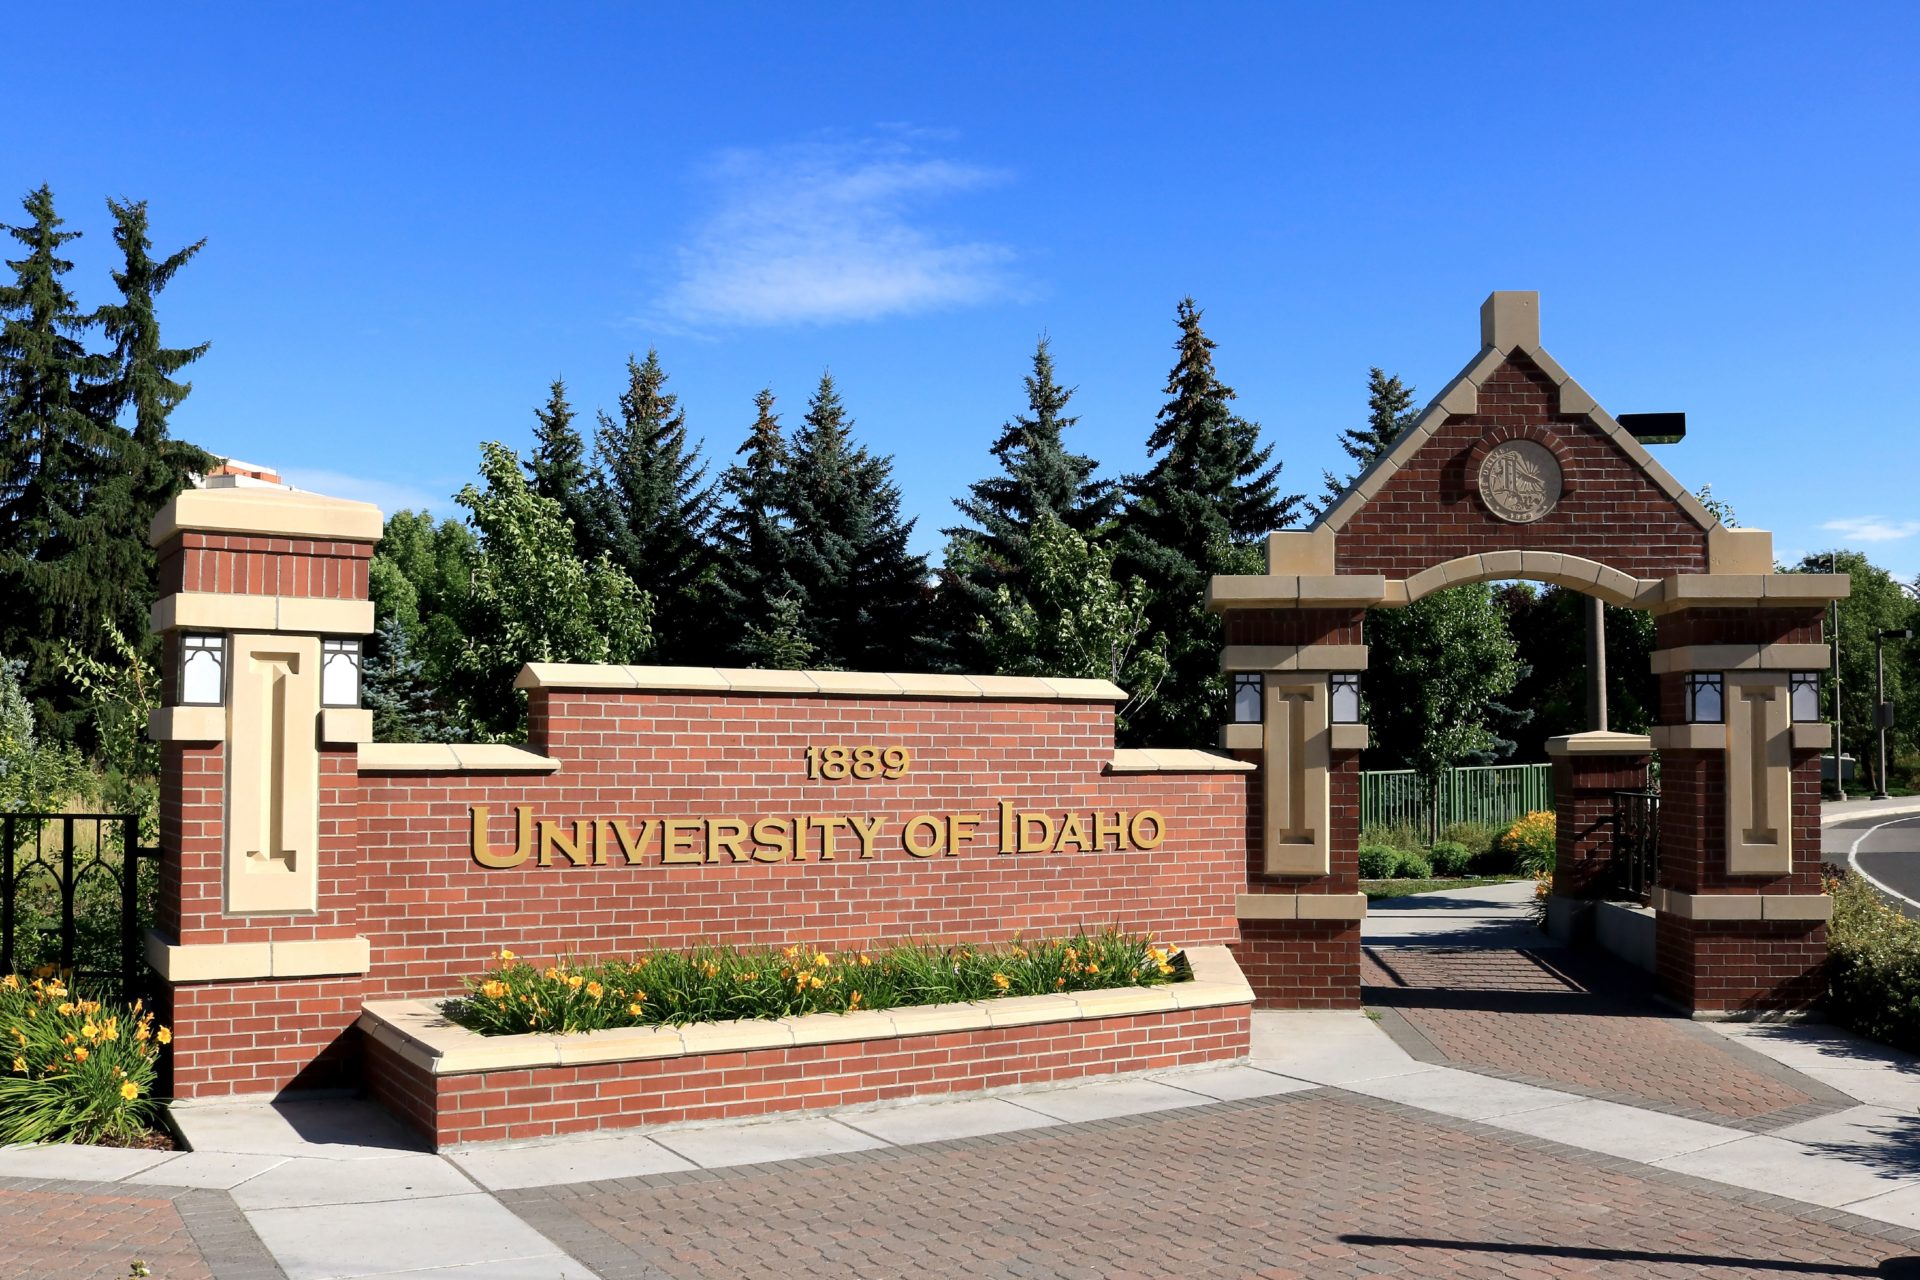 University of Idaho entry sign